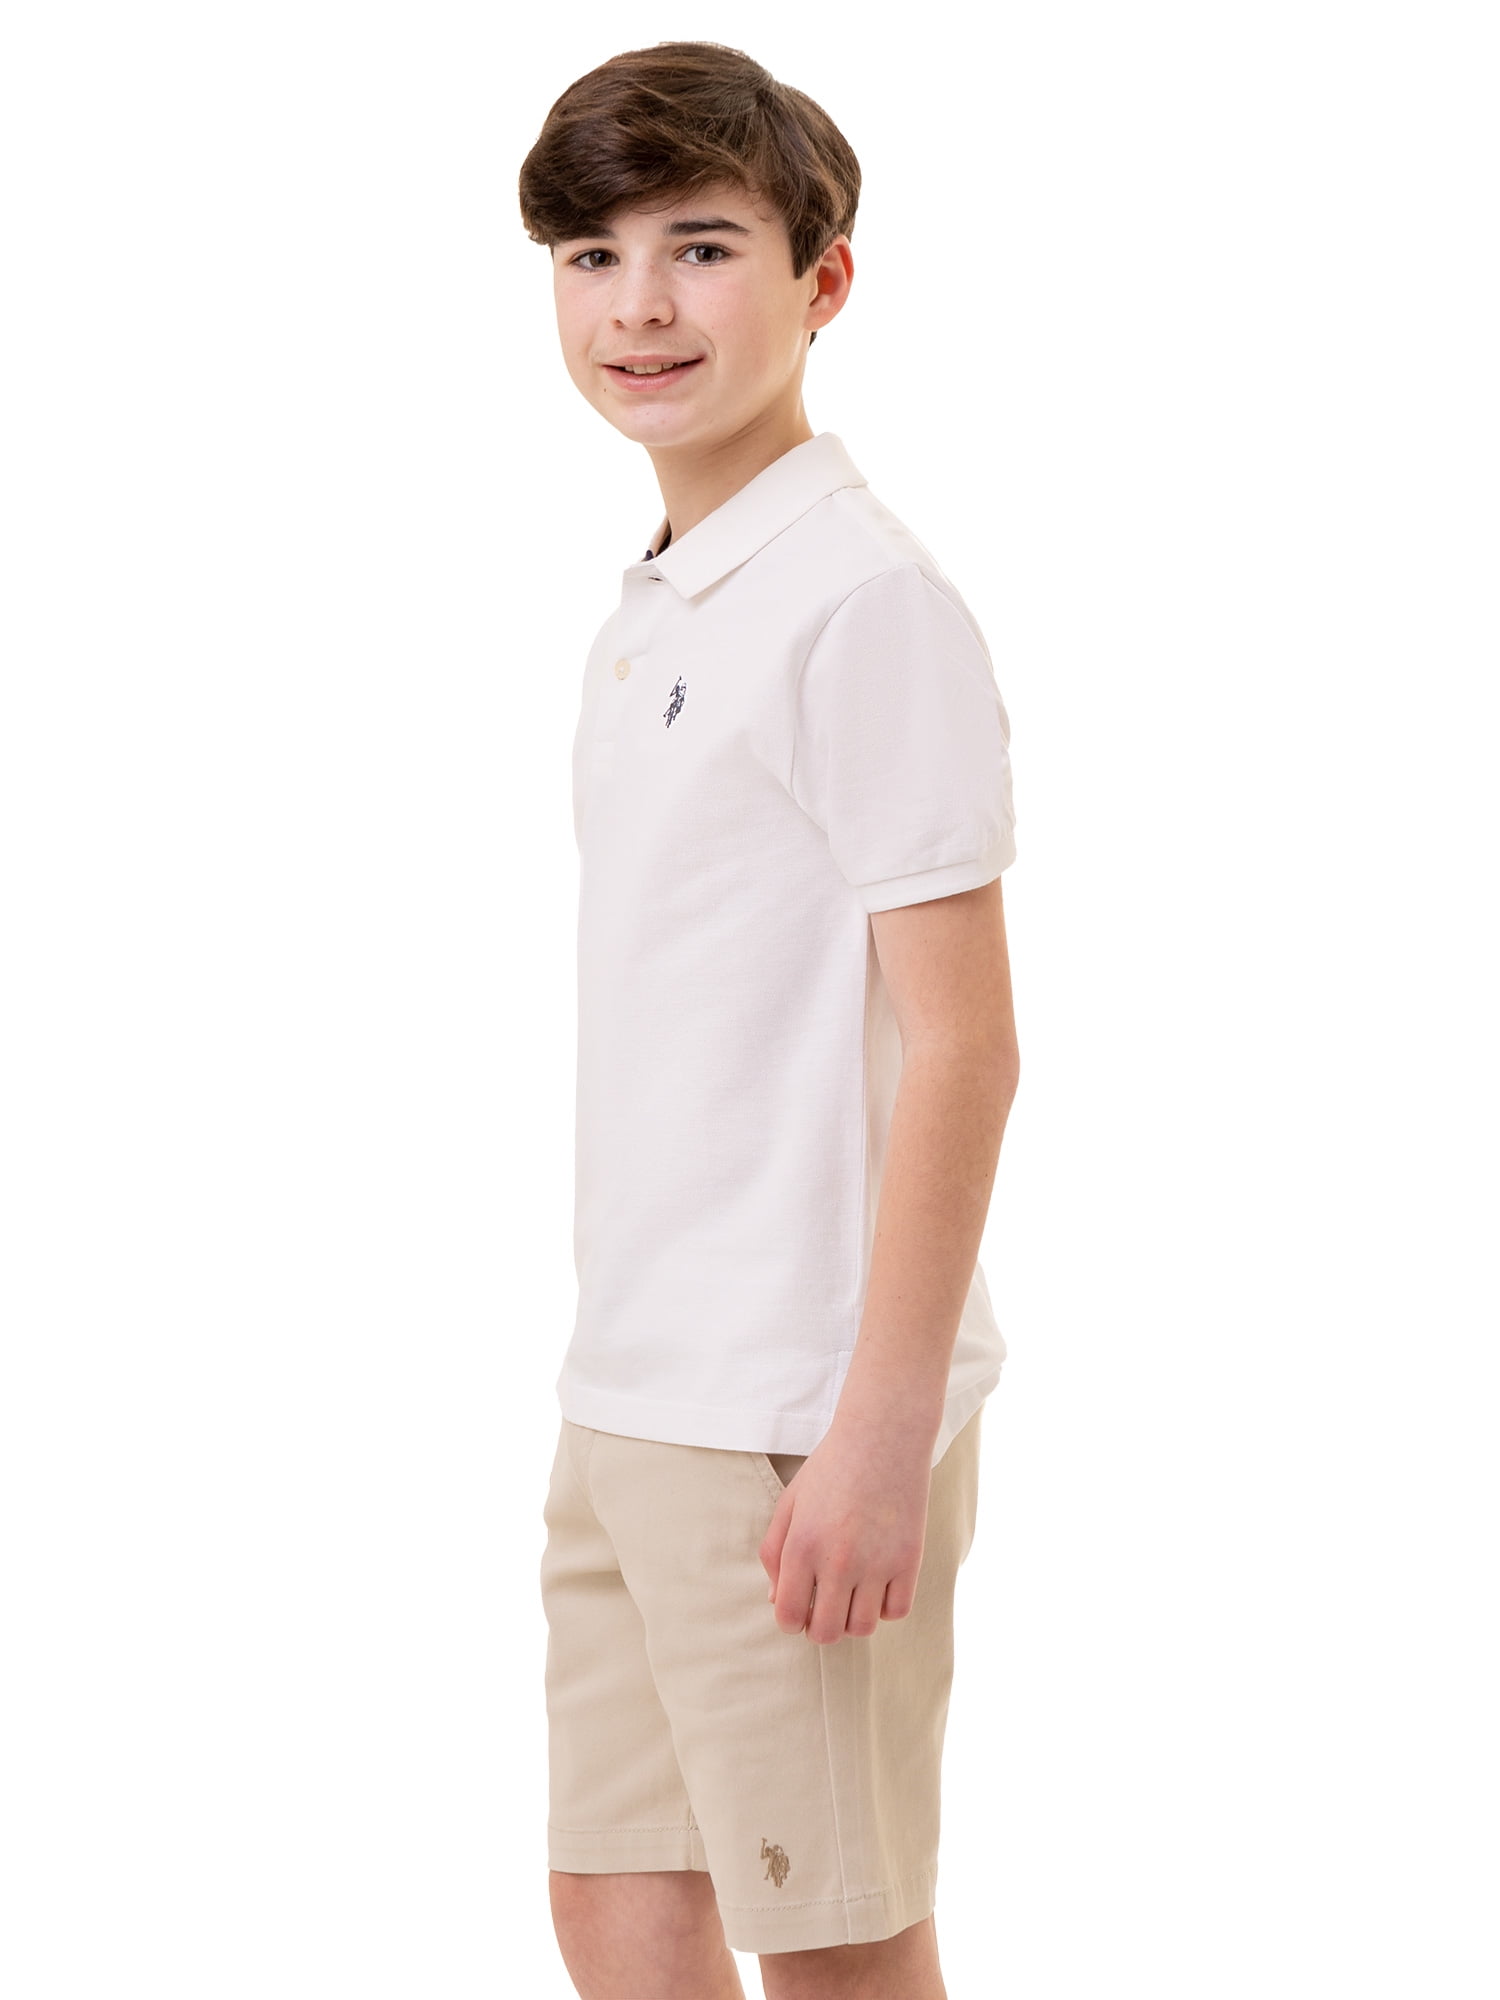 AK84U – Unisex Short Sleeve Pique Polo for Boys and Girls